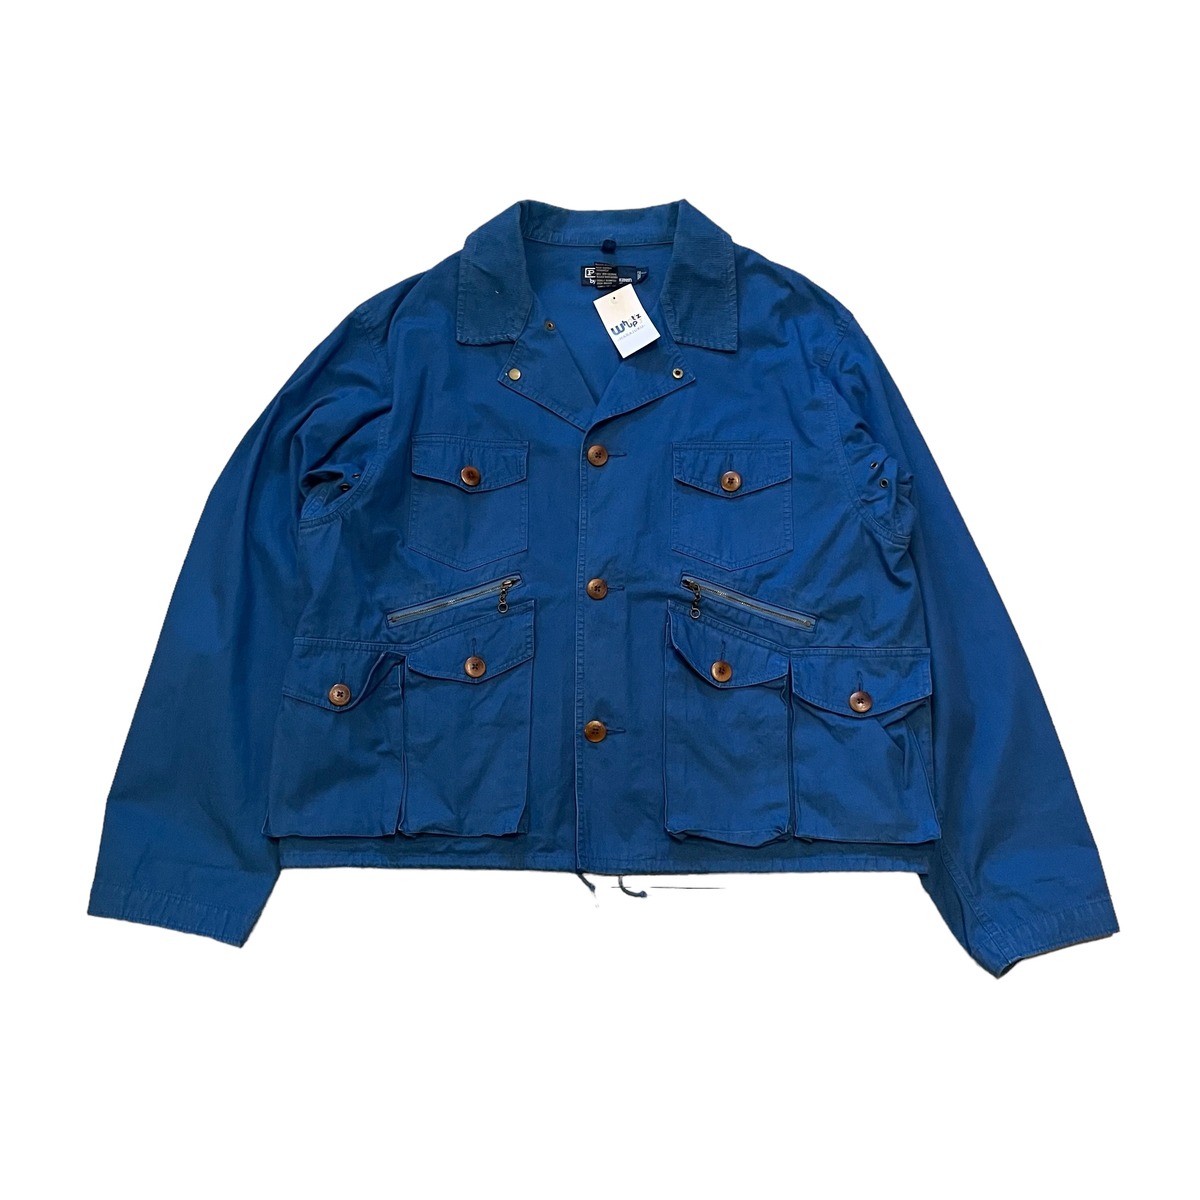 90s〜00s POLO Ralph Lauren Vintage Fishing jacket sampling Fishing jacket